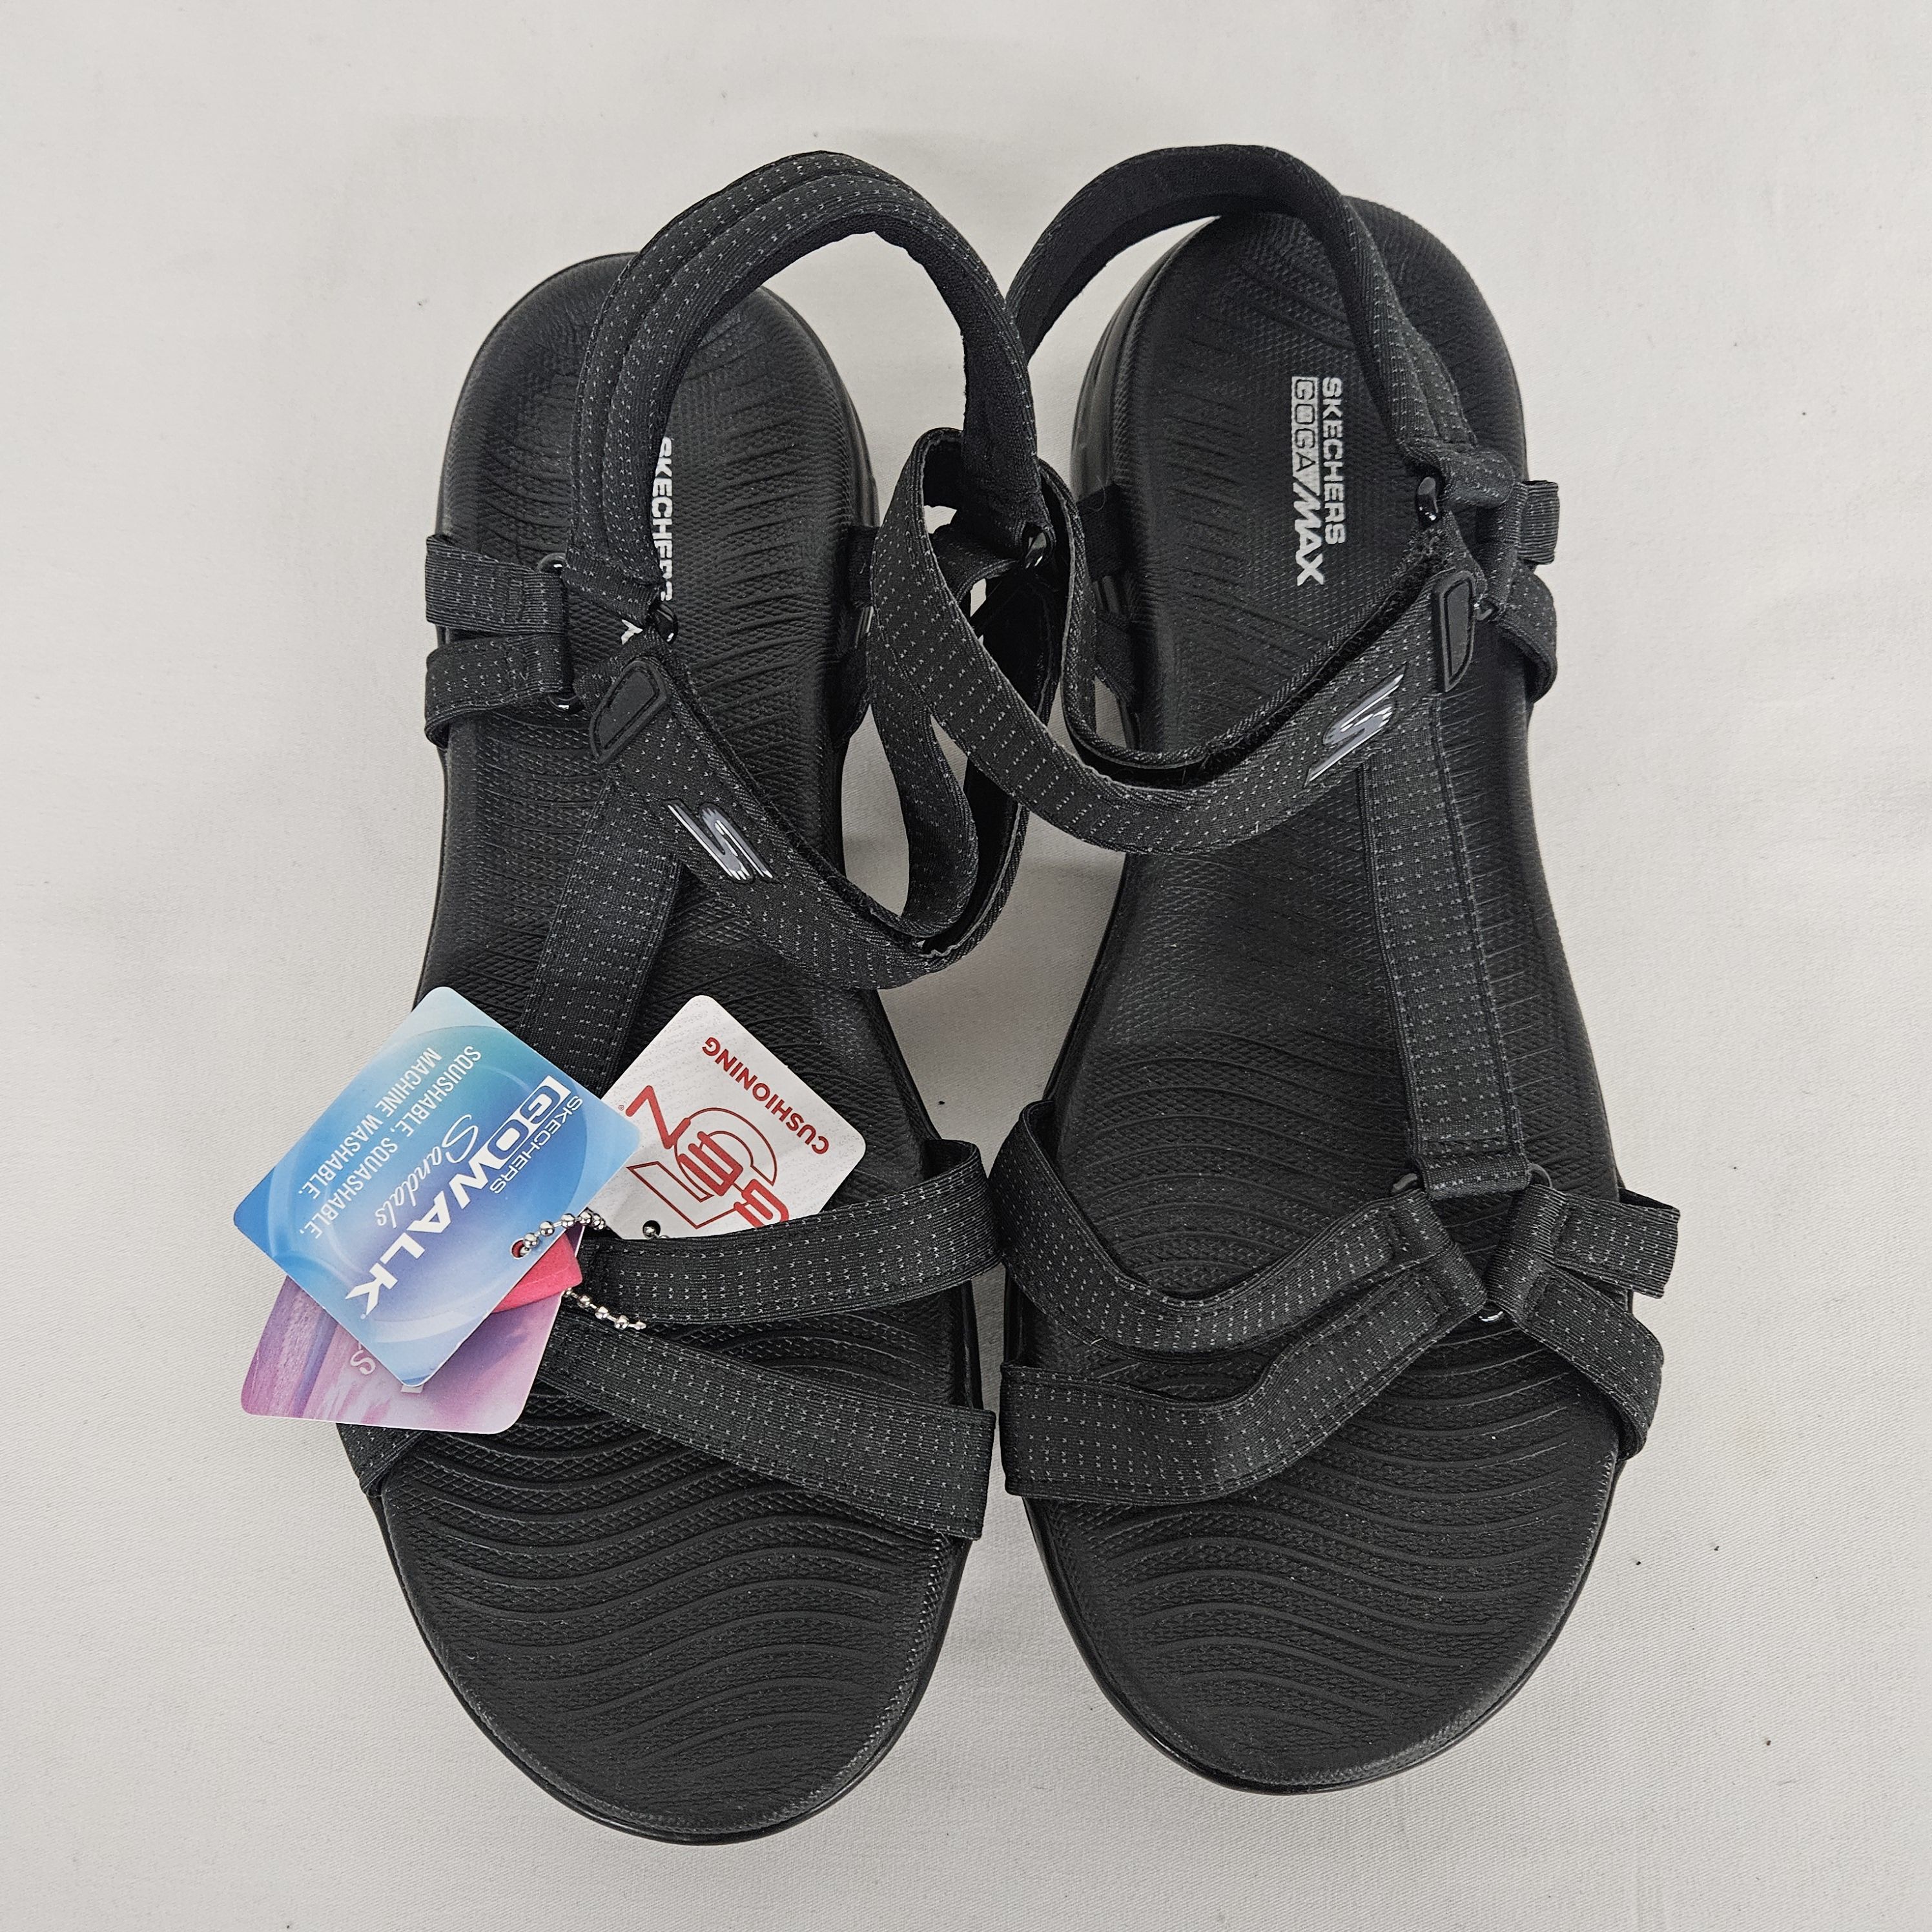 Details 284+ max sandals for women